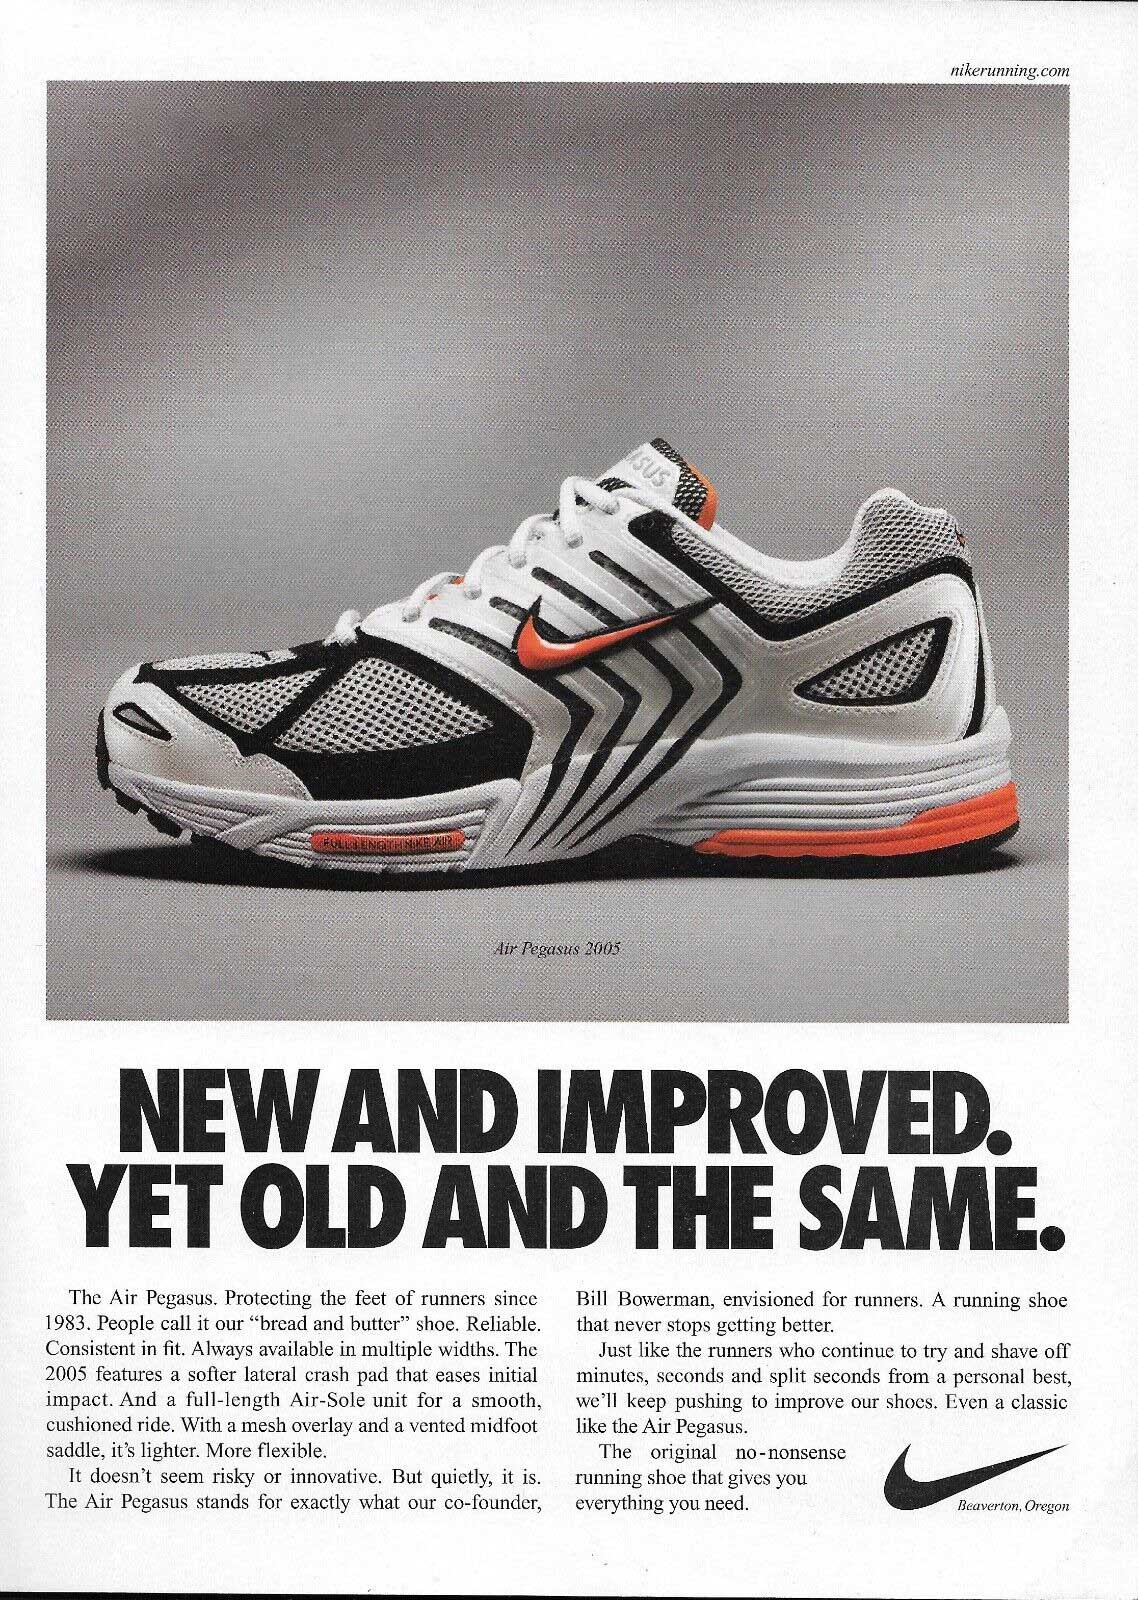 A vintage advertisement for Nike's Air Pegasus 2005 running sneaker